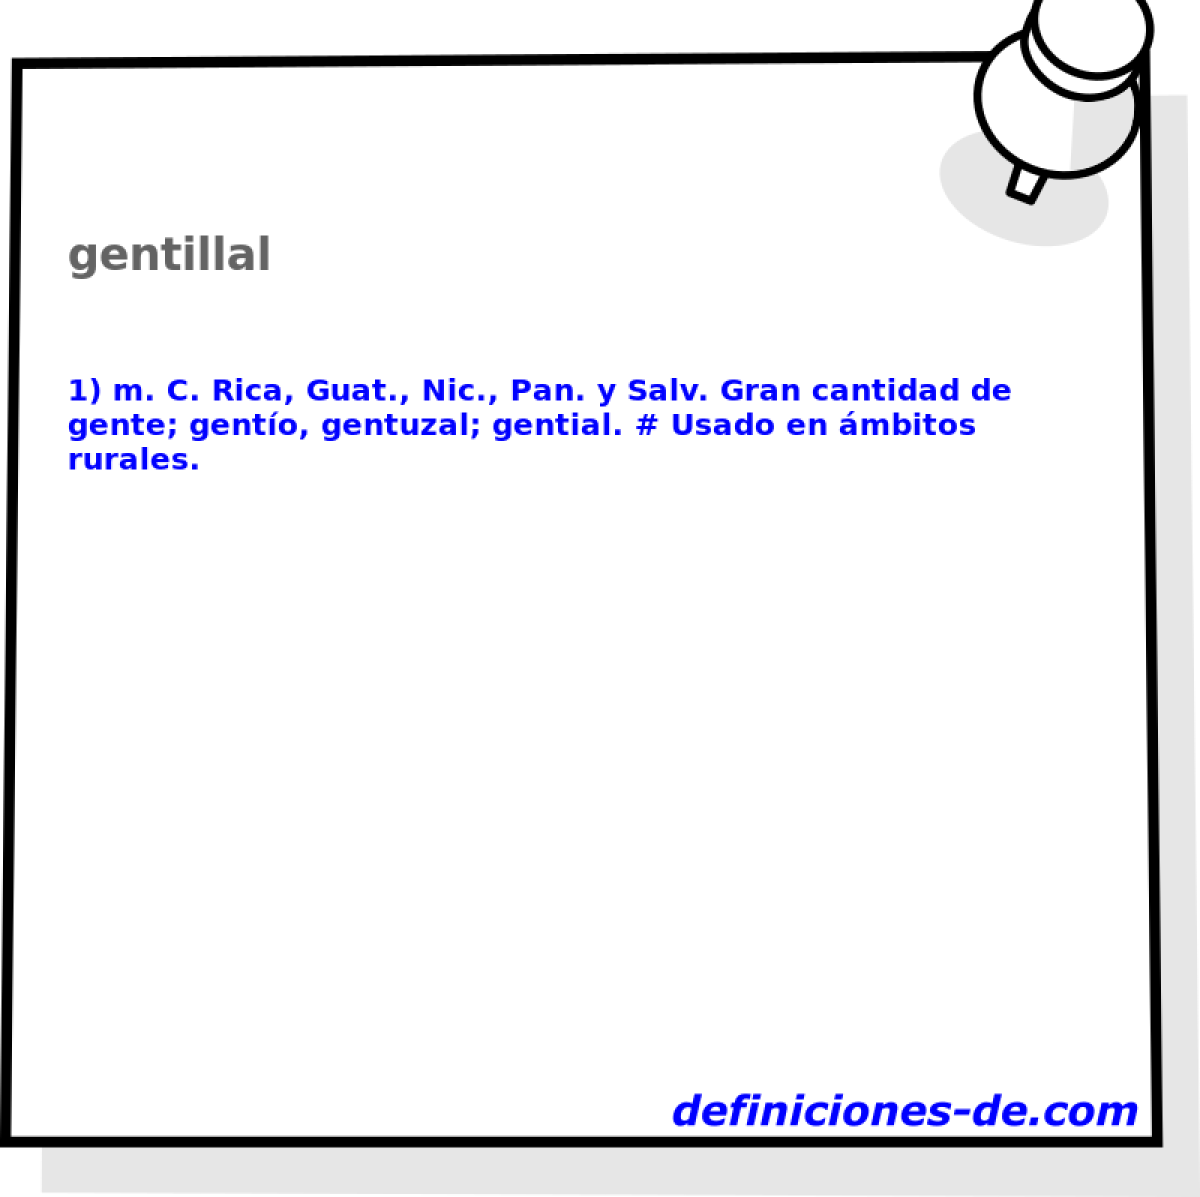 gentillal 